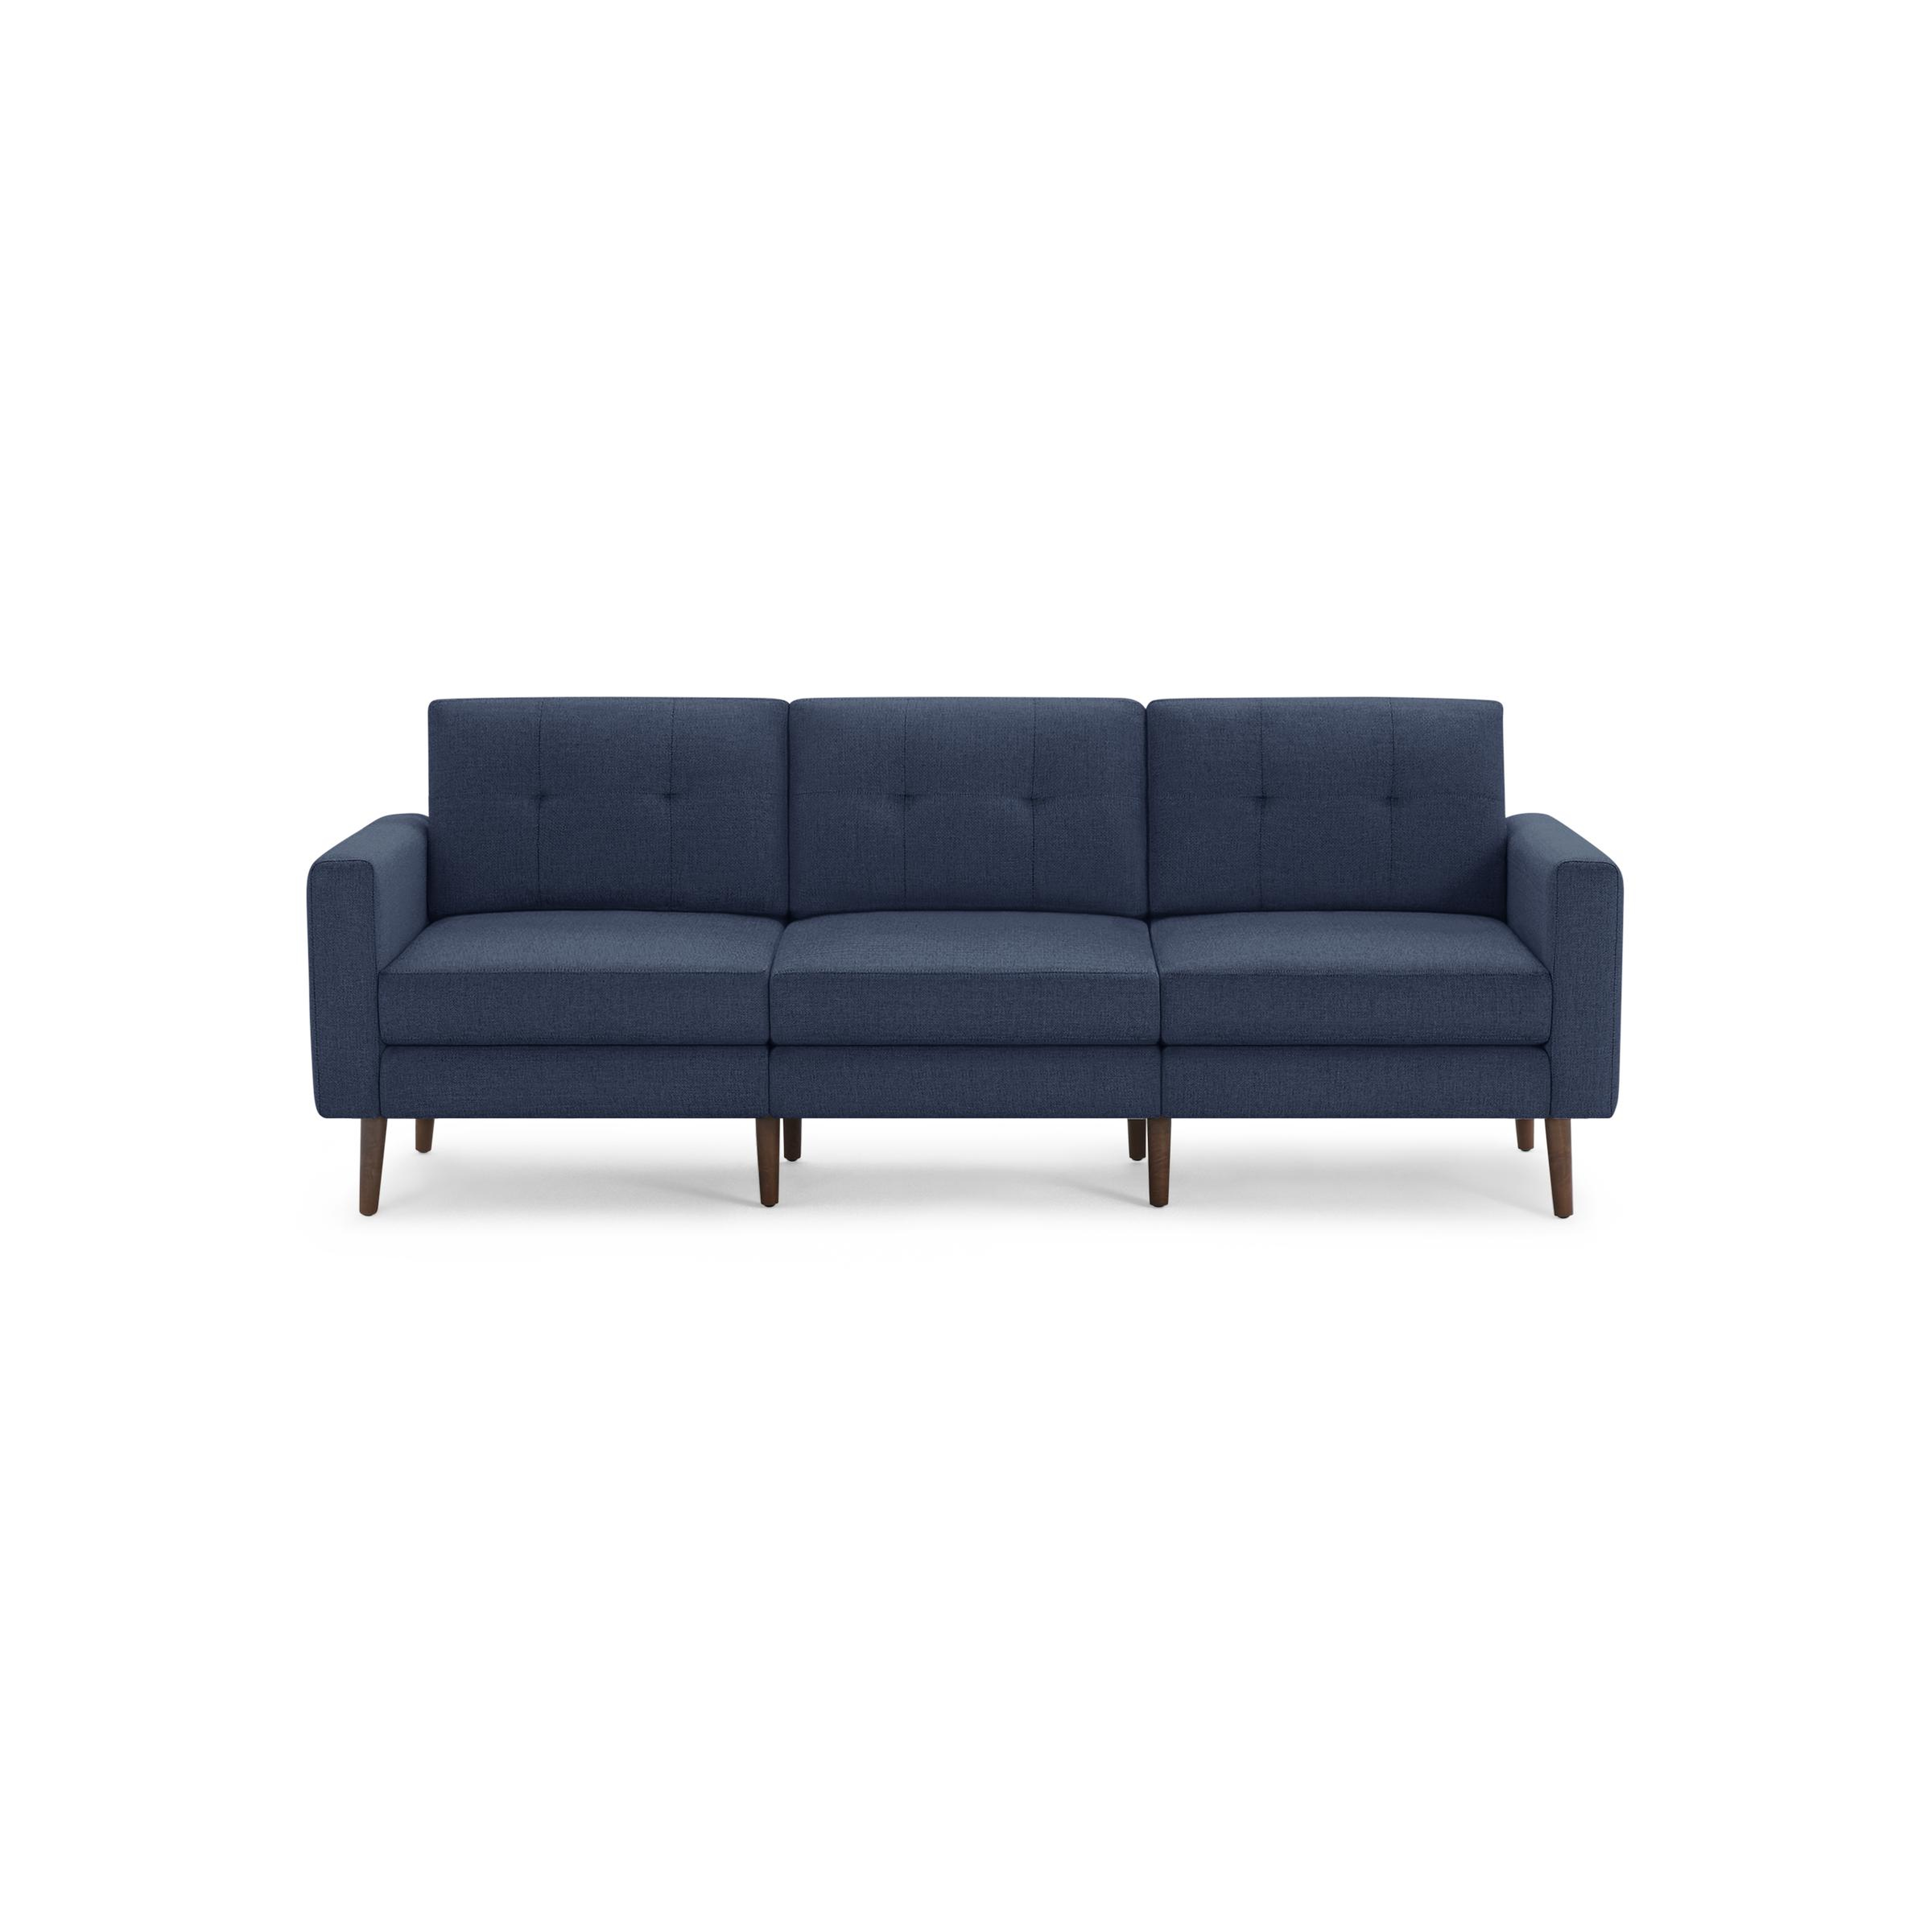 The Block Nomad Sofa in Navy Blue, Walnut Legs - Burrow